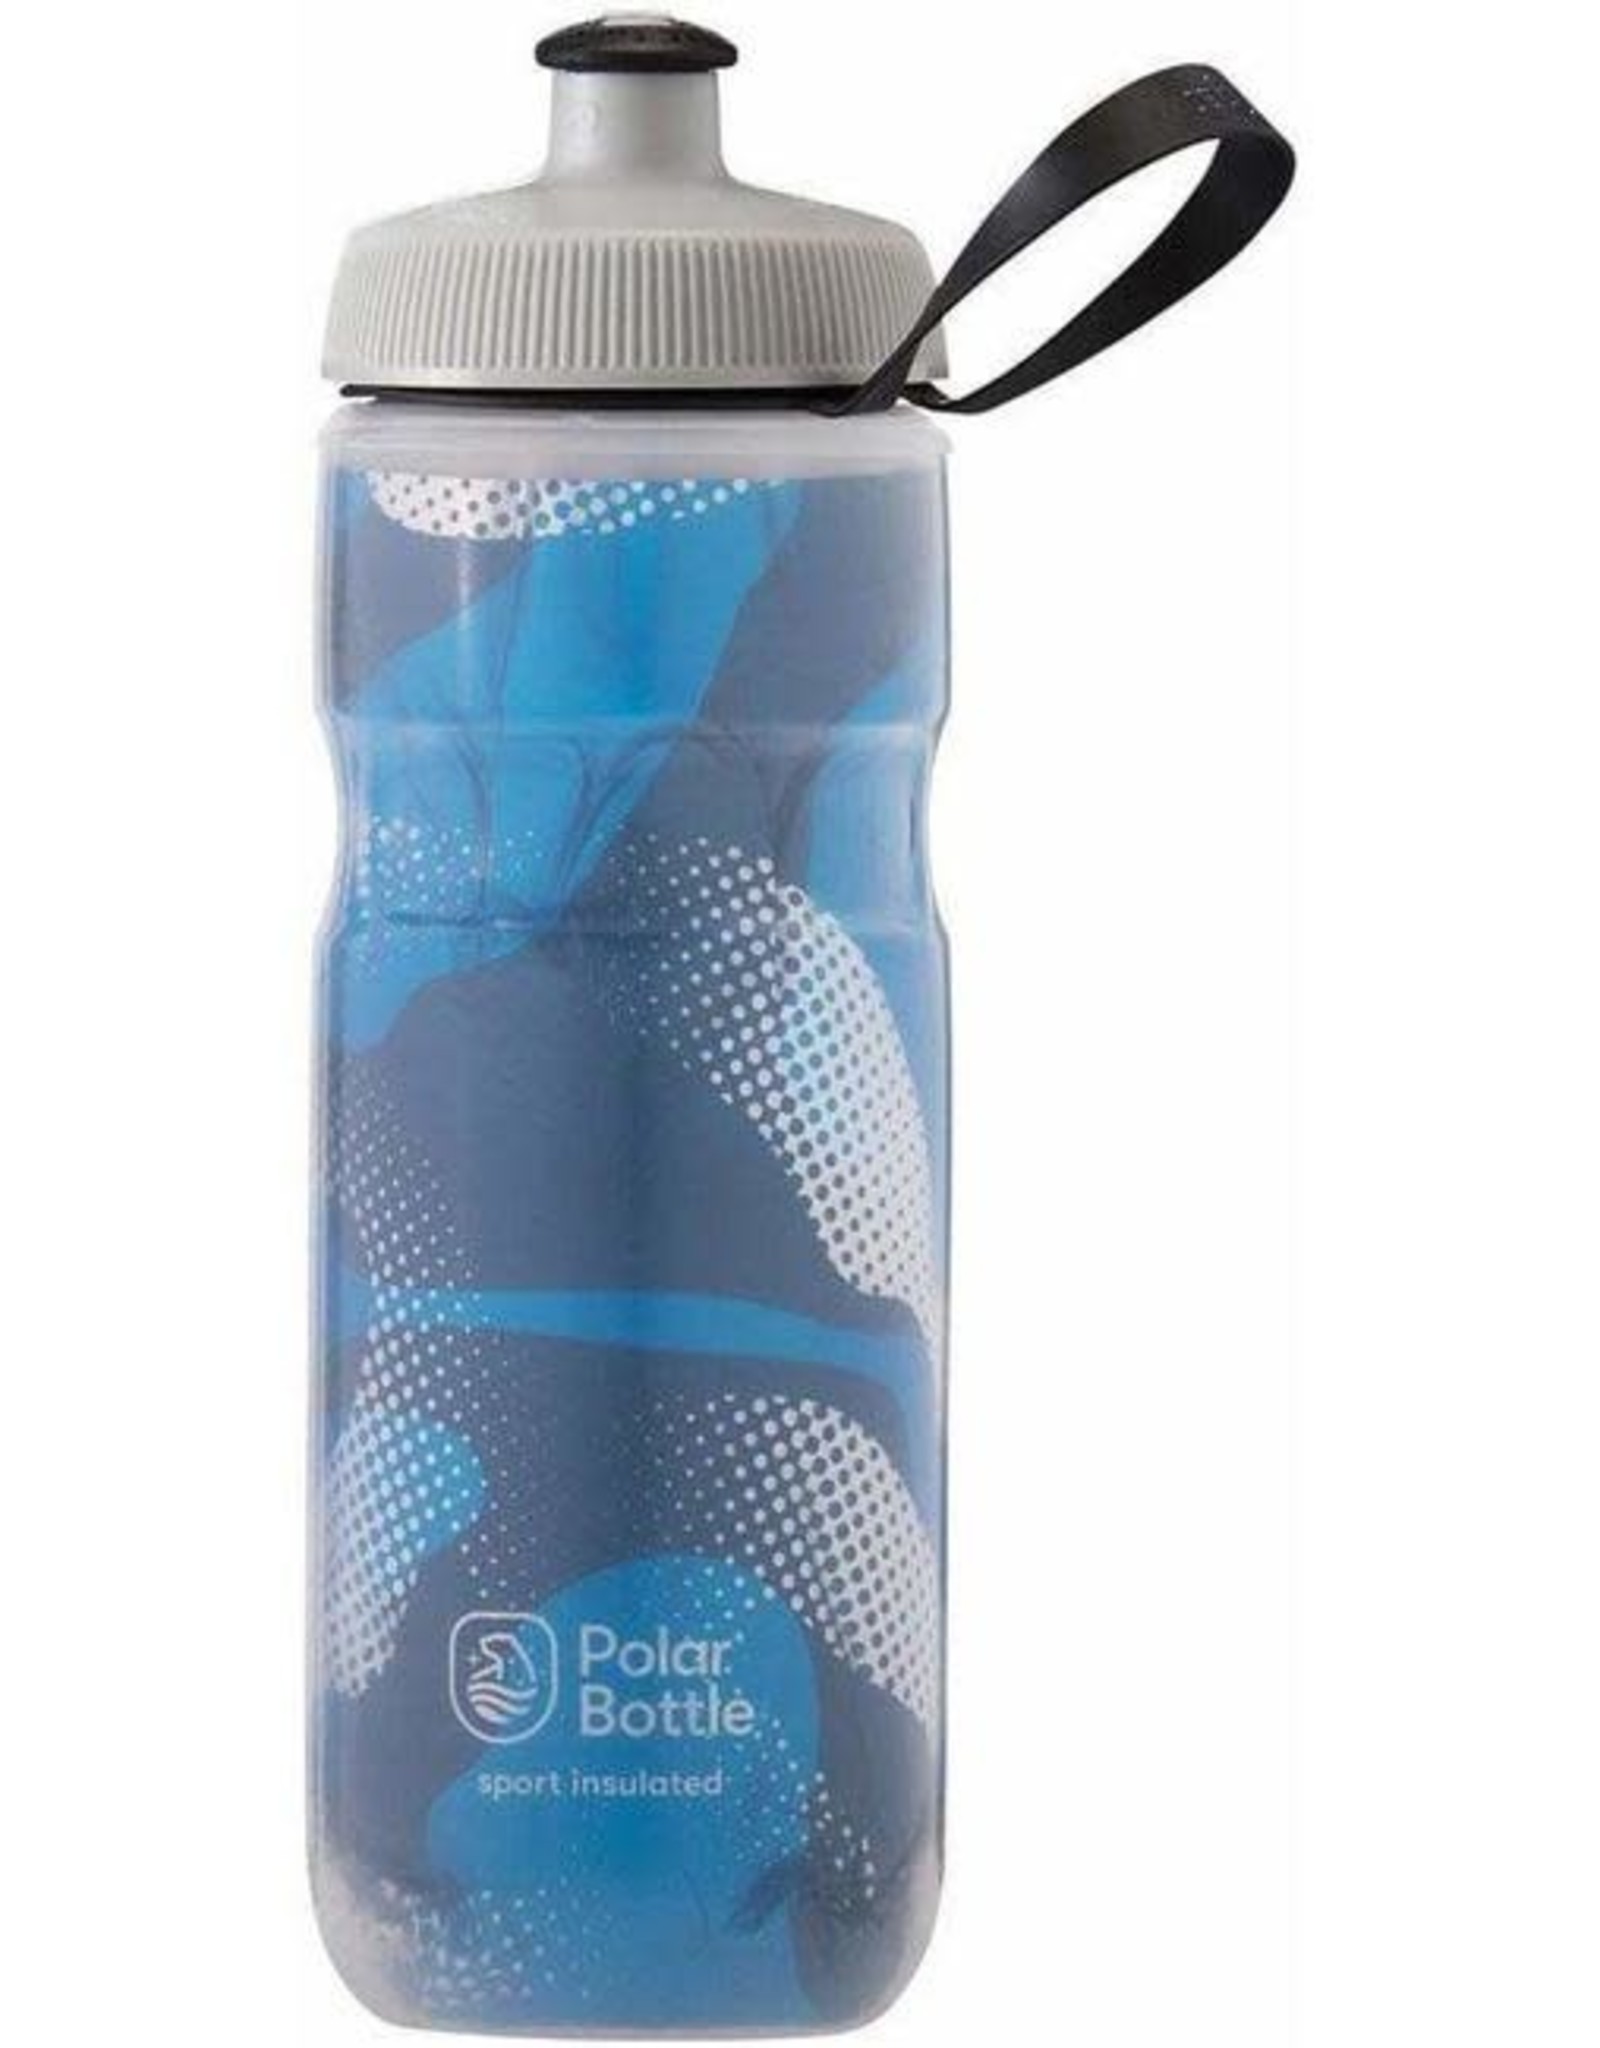 Polar Bottles Sport Insulated Contender Water Bottle - 20oz, Blue/Silver